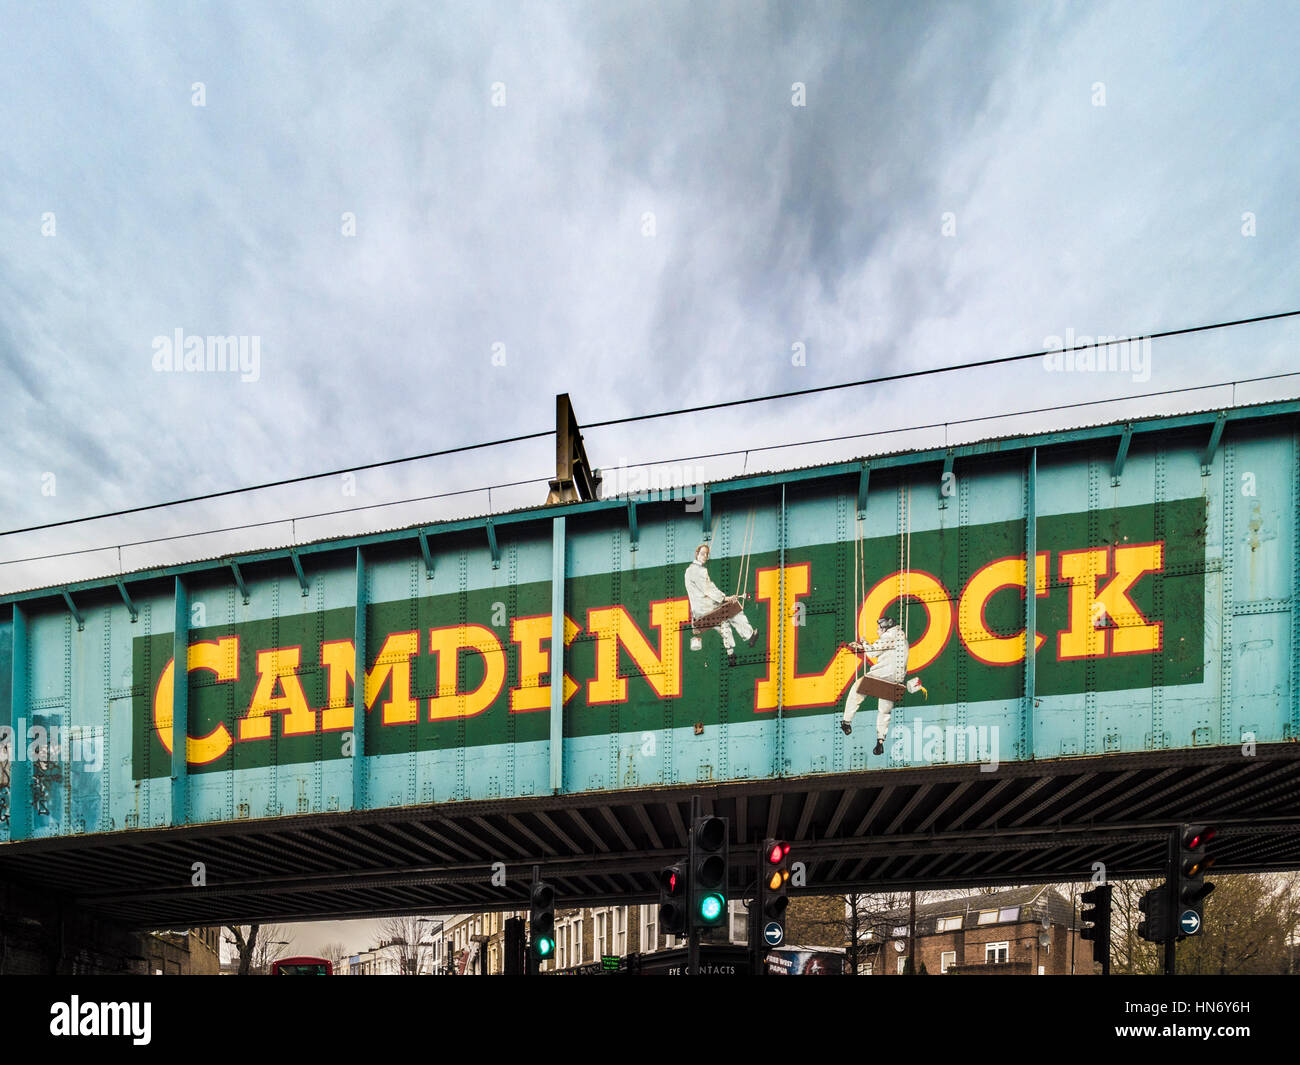 Iconic painted Camden Lock sign on side of railway bridge, London, UK. Stock Photo